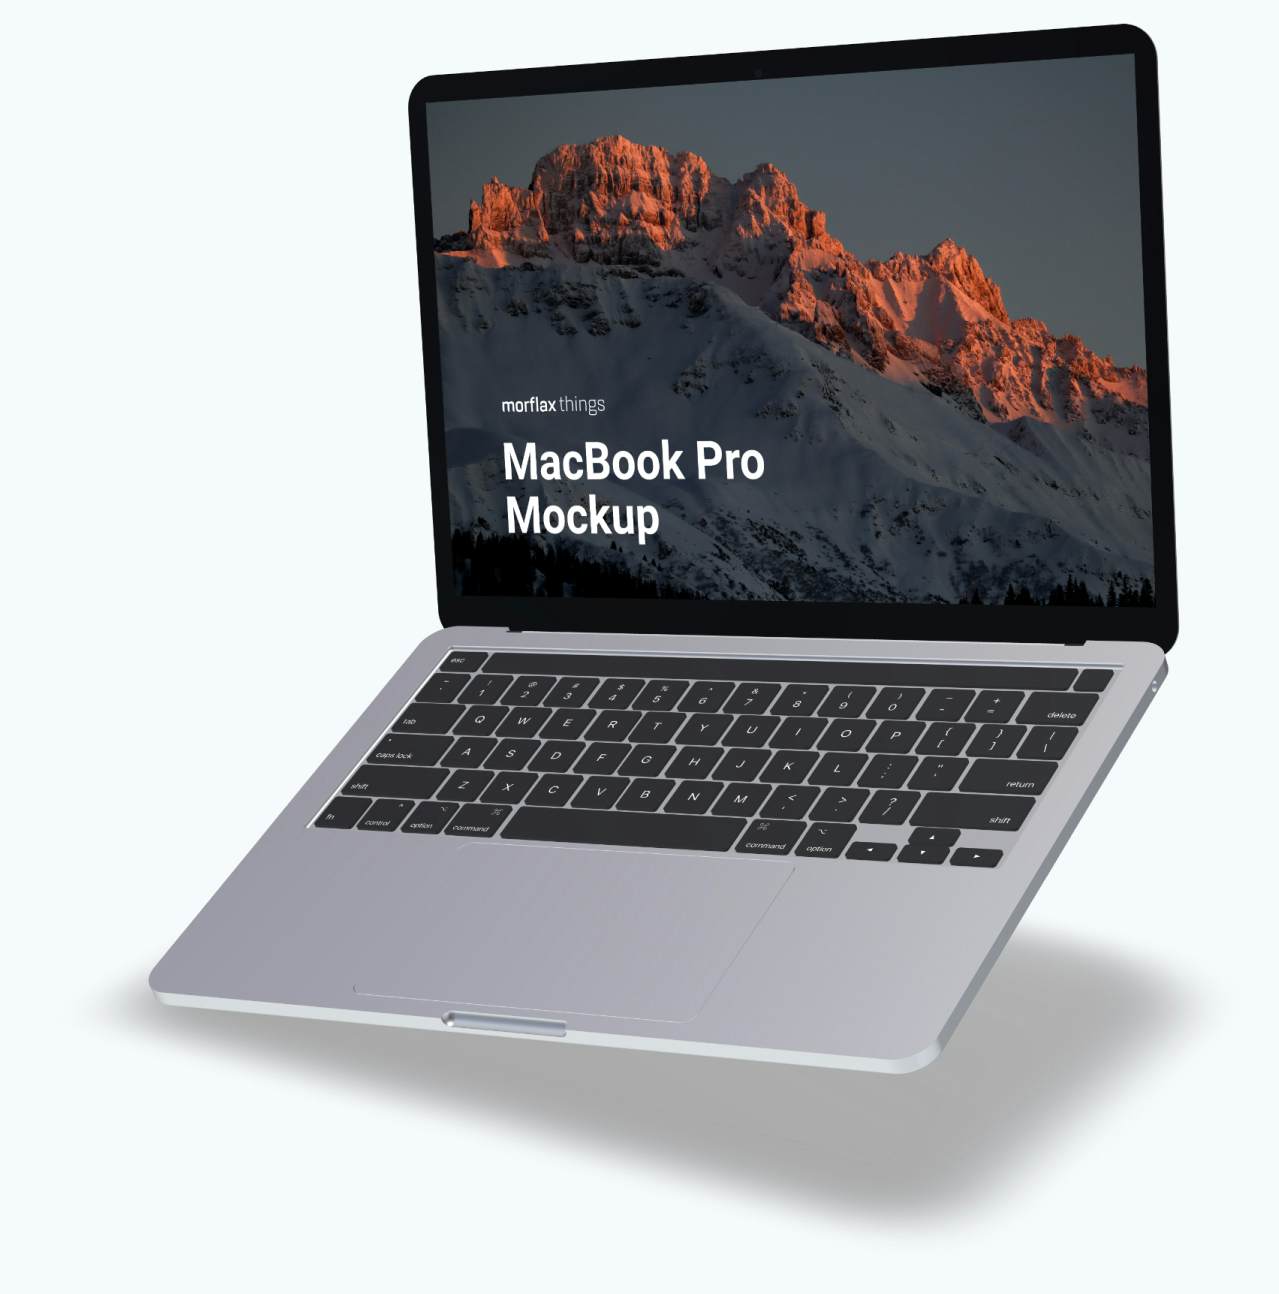 Apple MacBook Pro 13 mockup